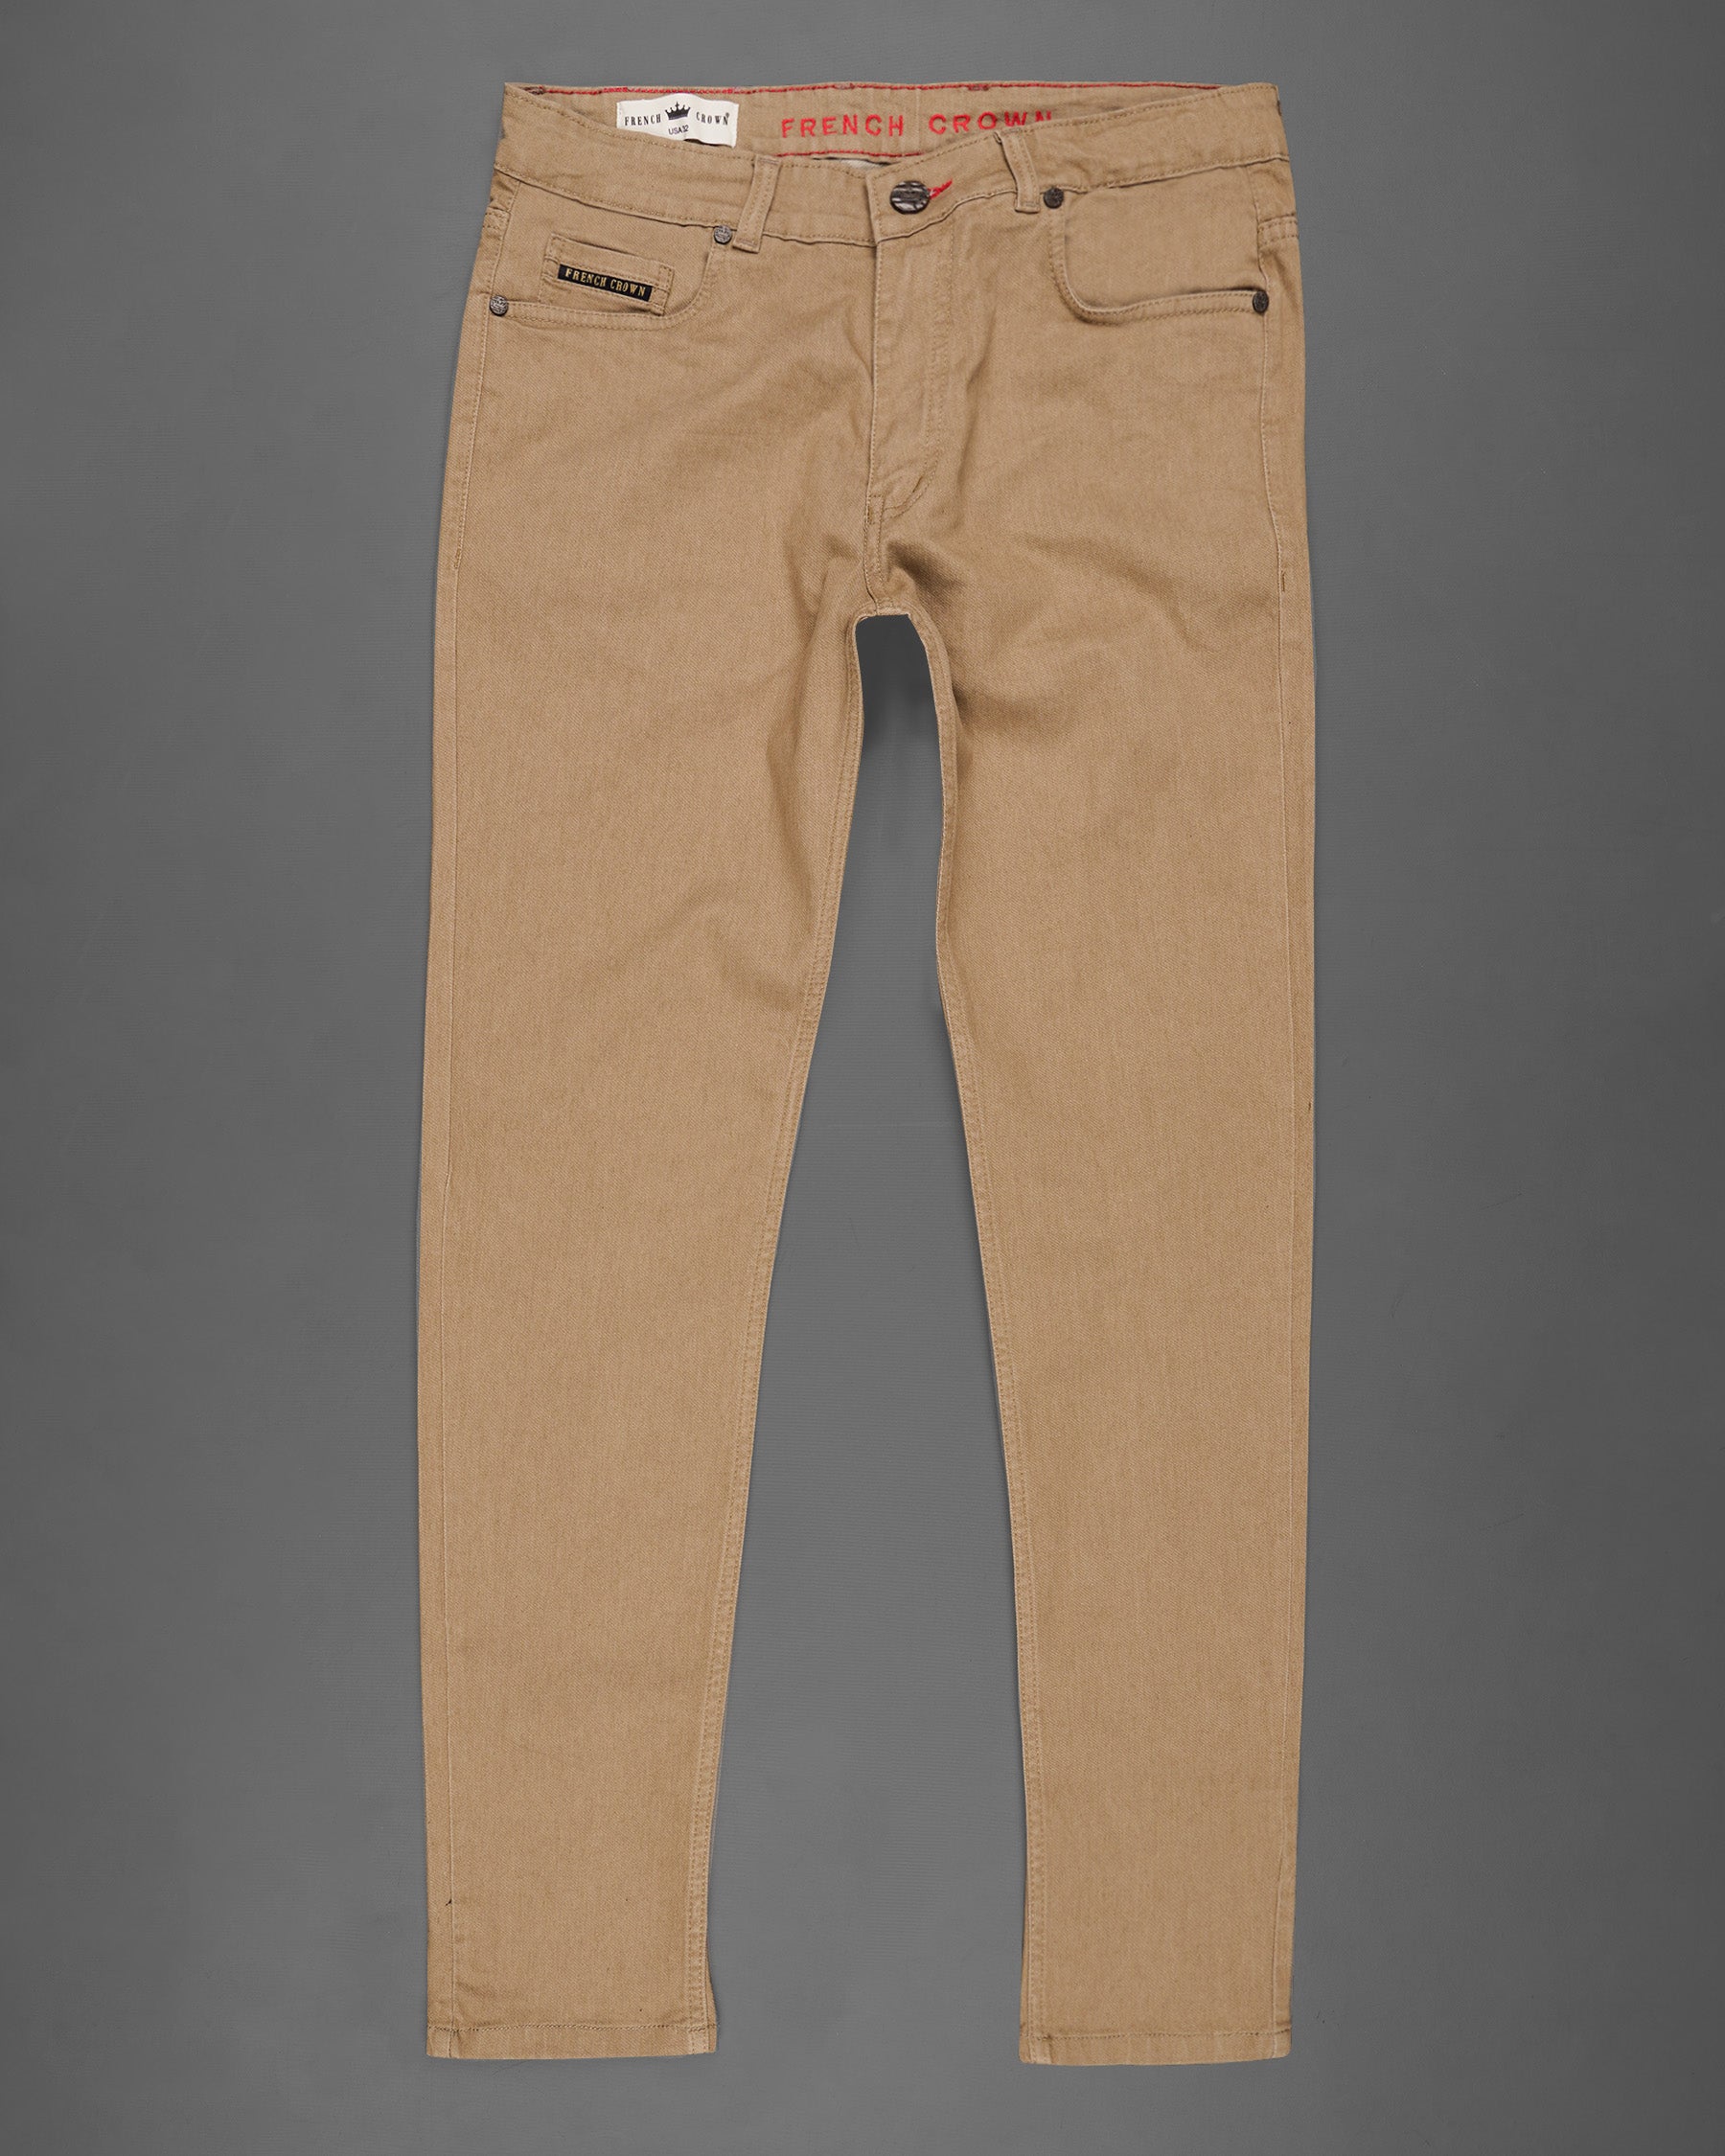 Buy VOI Non Denim Jeans Men's Dark Khaki Maharishi Fit Non Denim Jeans at  Amazon.in